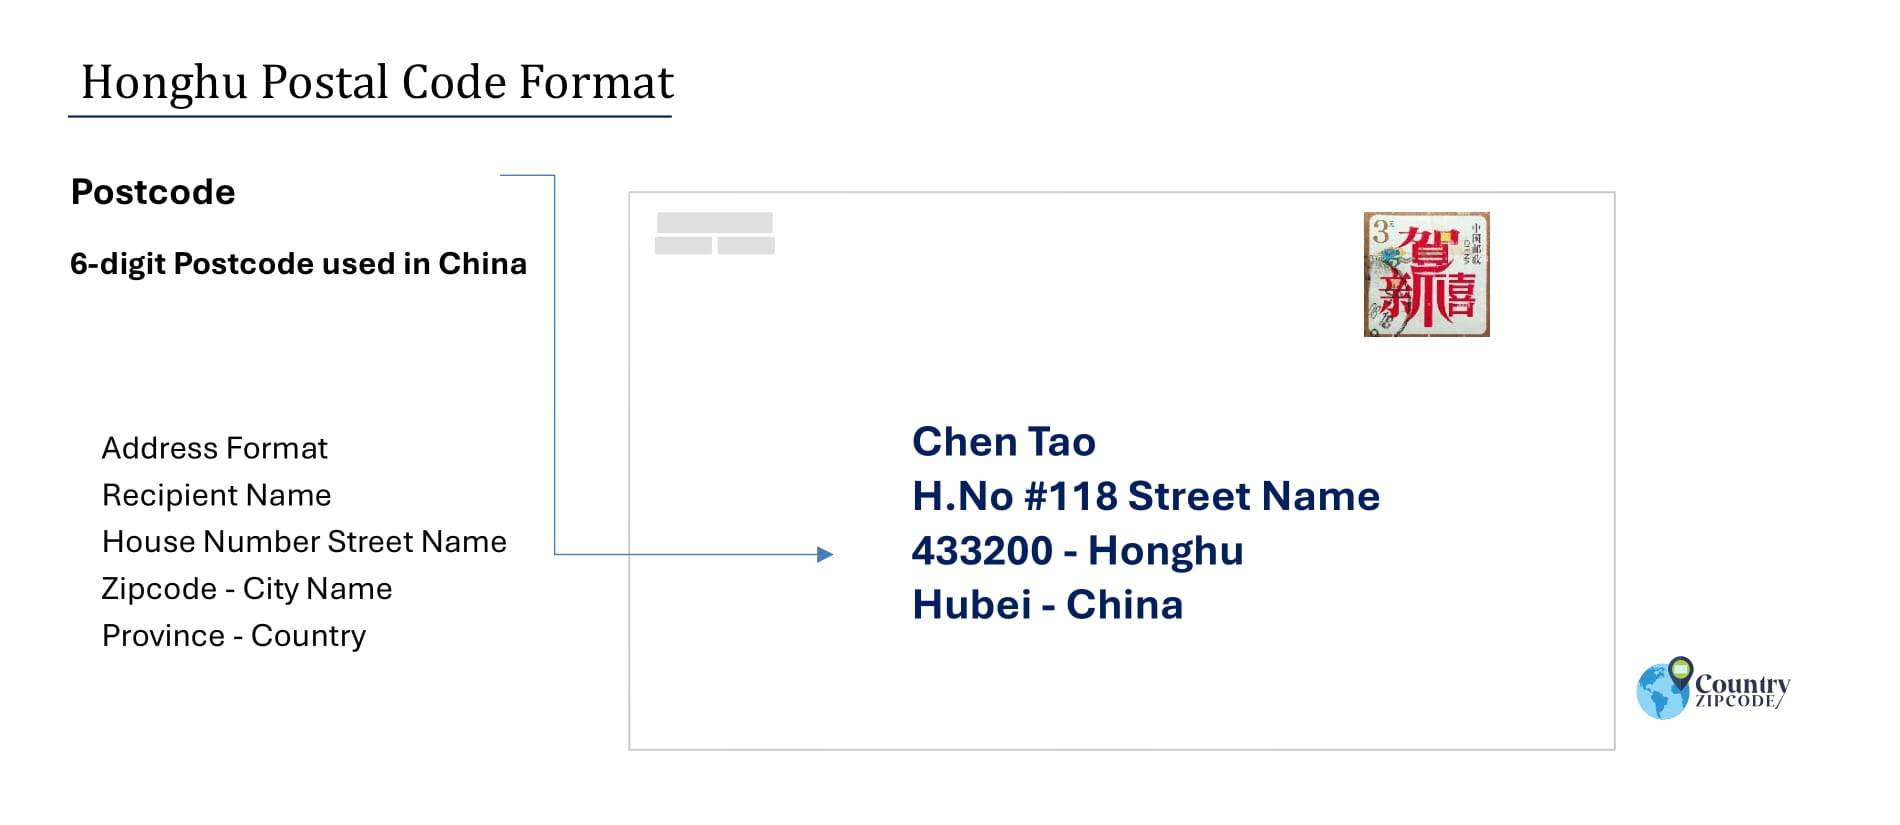 Example of HonghuChinaPostalcodeandAddressformat